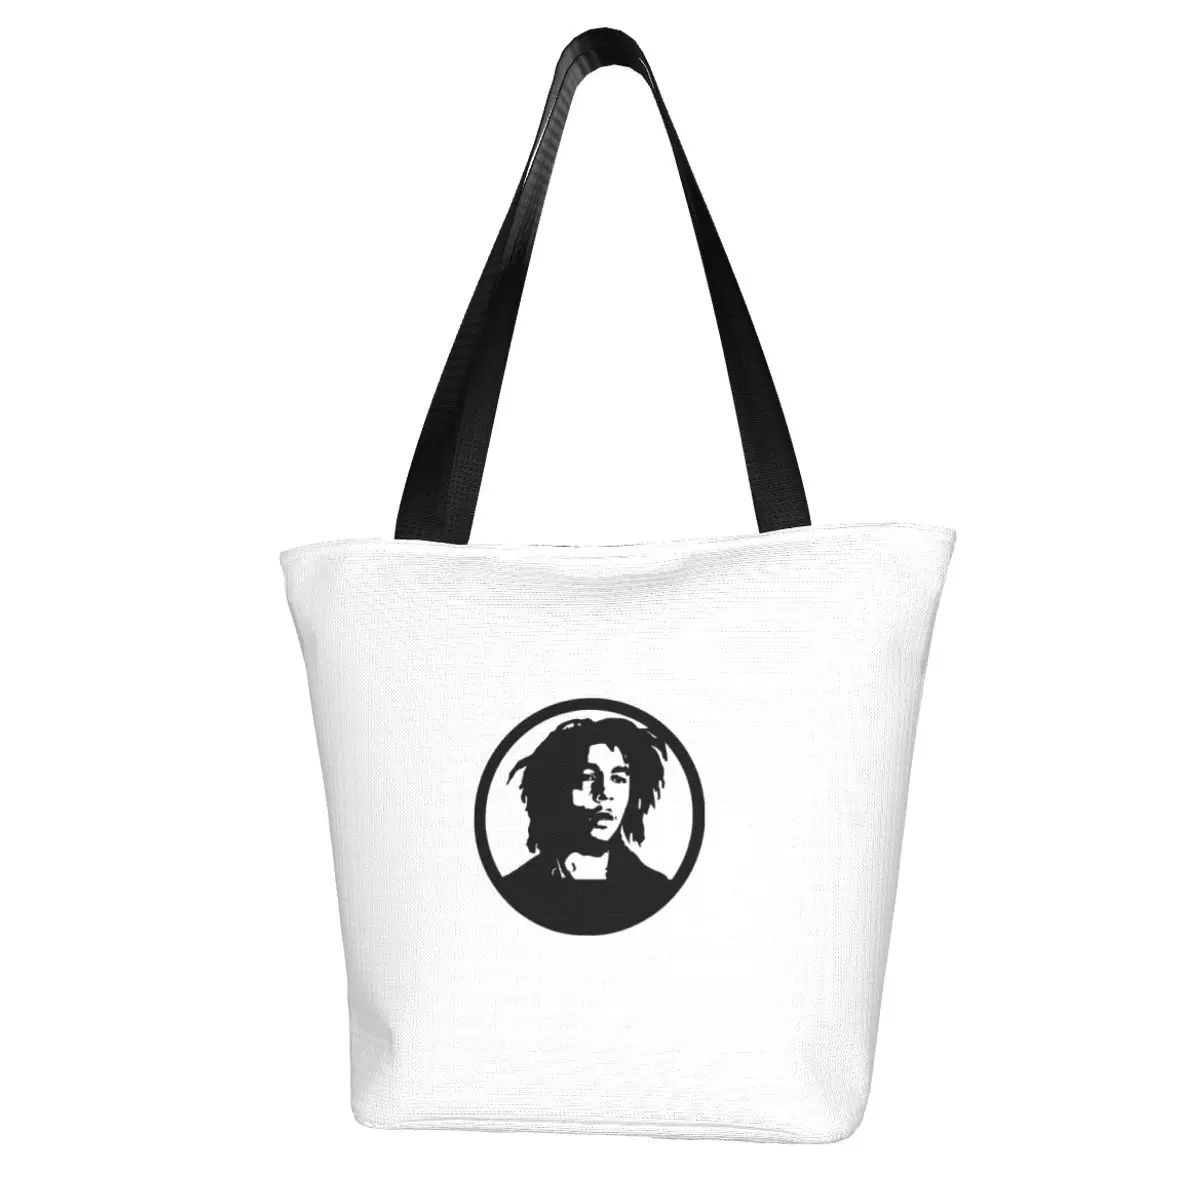 Bob Marley Shopping Bag Aesthetic Cloth Outdoor Handbag Female Fashion Bags